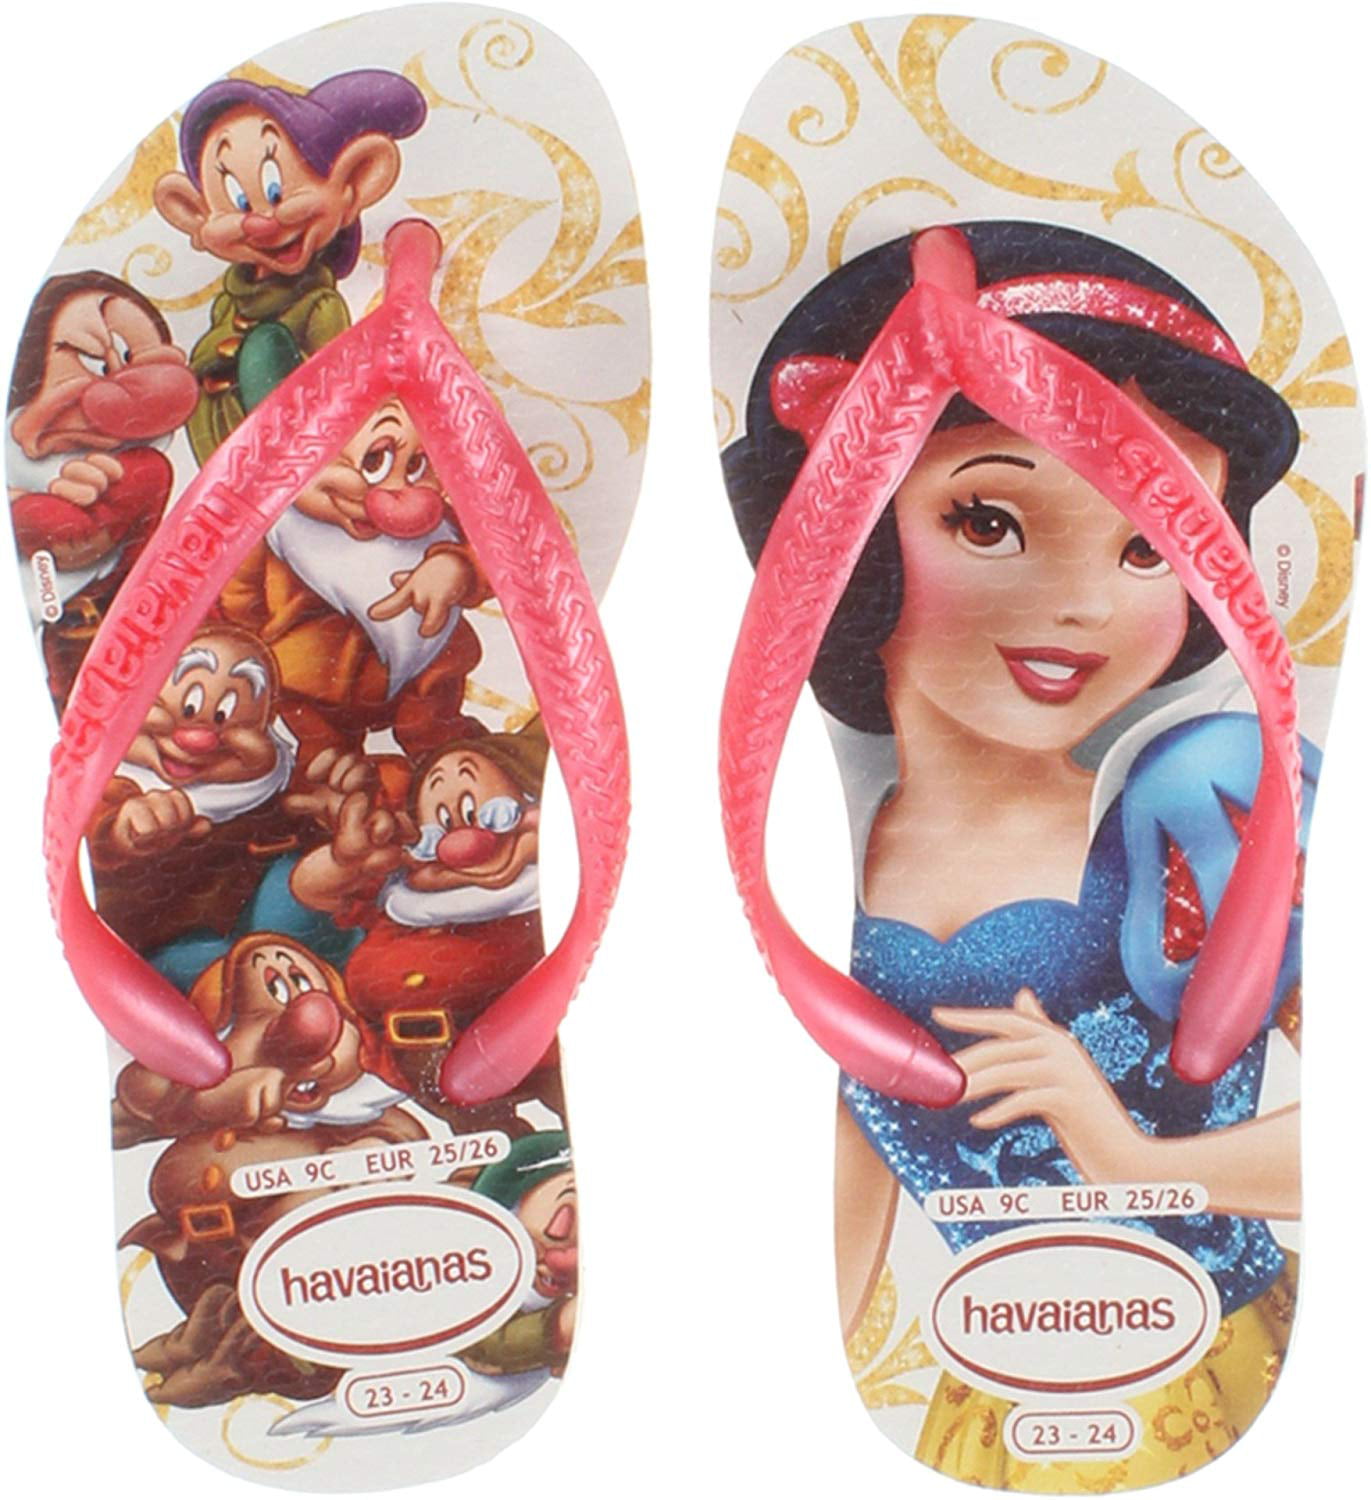 Havaianas Slim Flip Flop Sandals, Snow White, 3-4 M US Little - Walmart.com